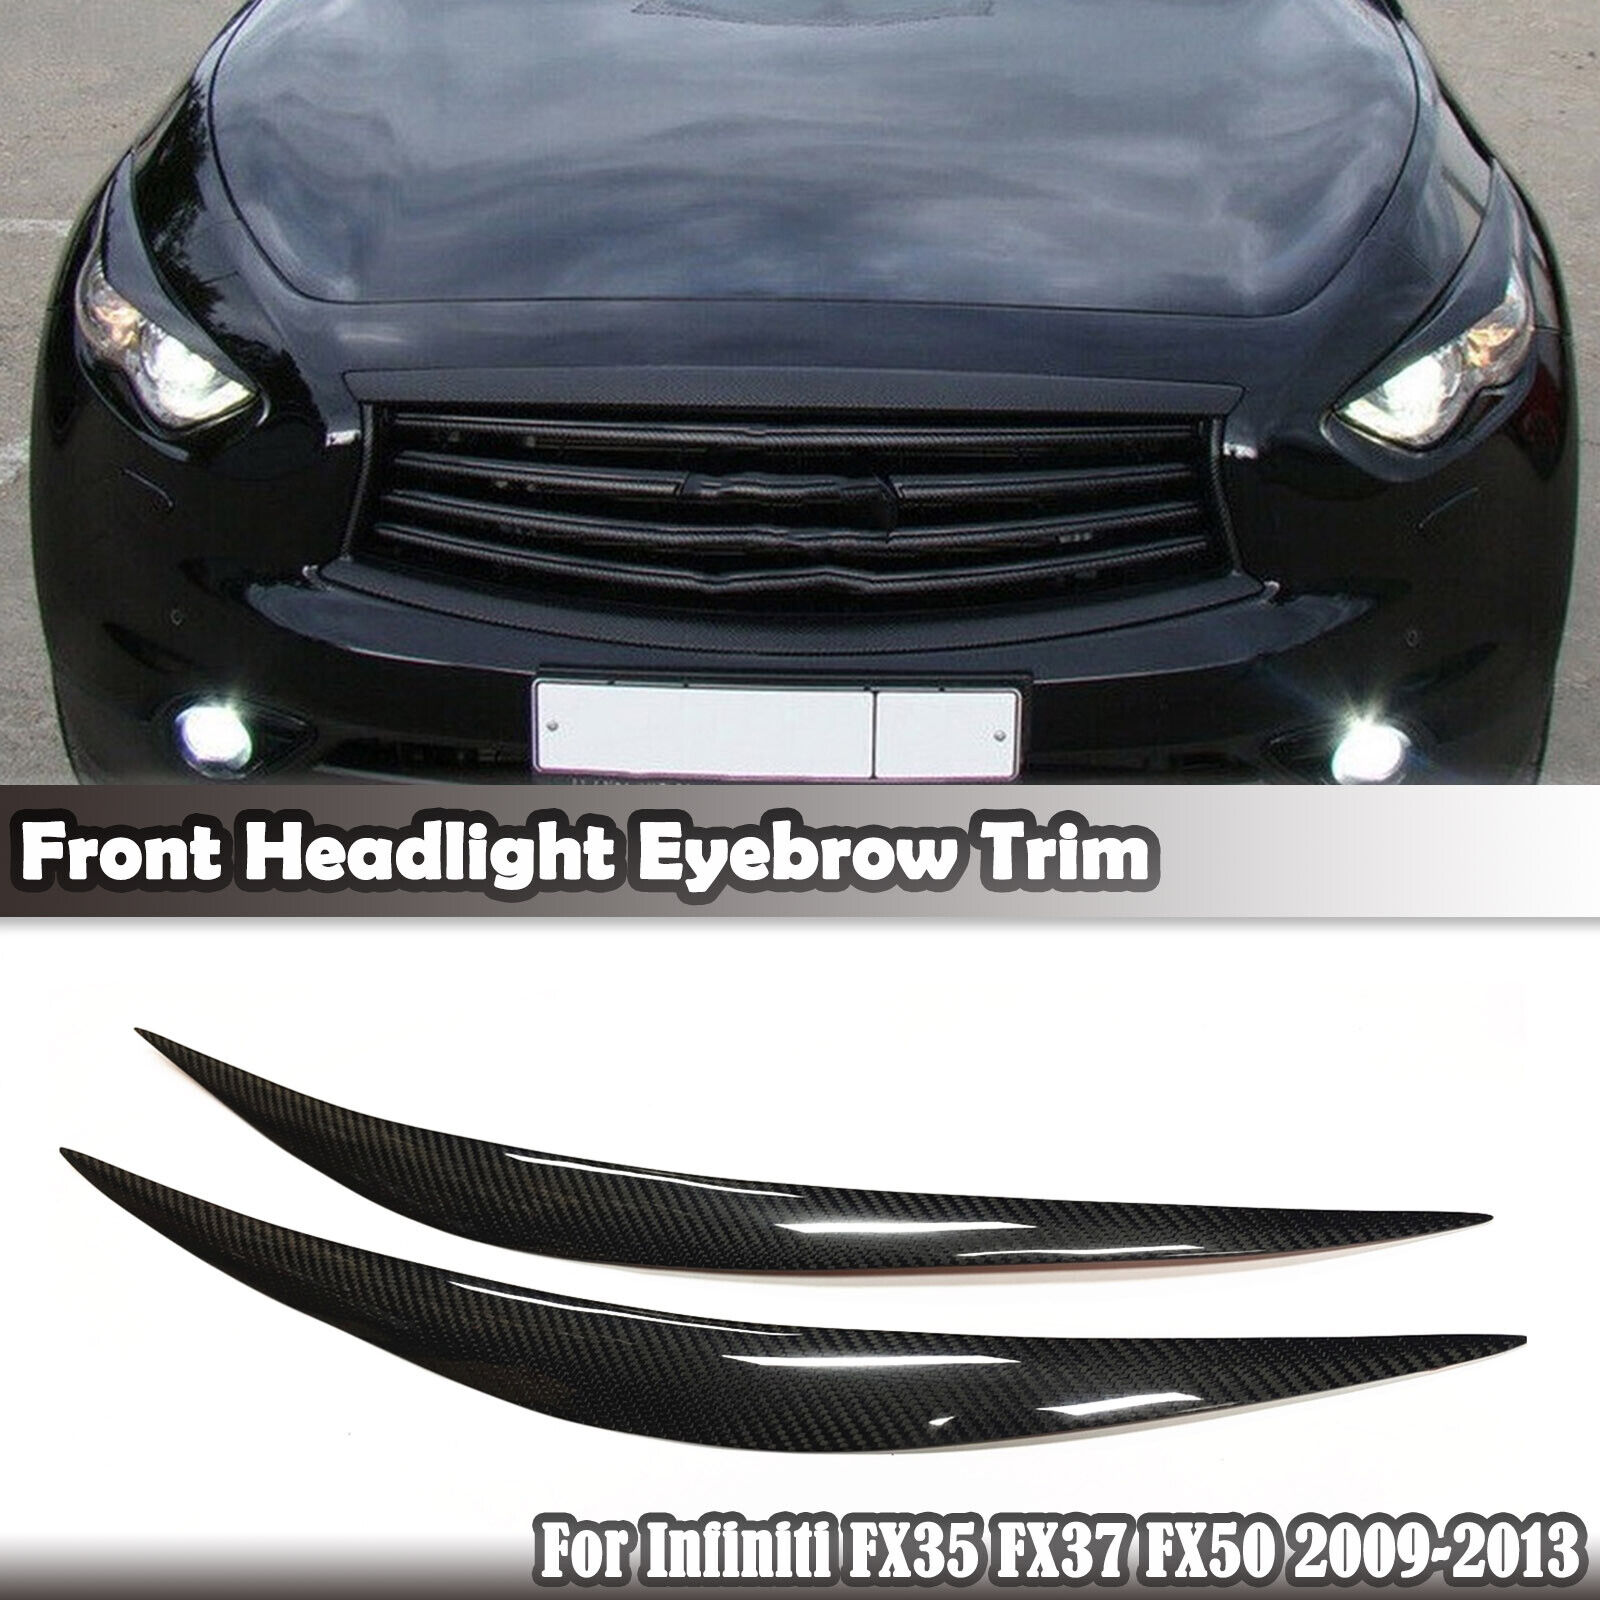 Front Headlight Eyebrow Eyelid Trim Cover For Infiniti FX35 FX37 FX50 2009-2013